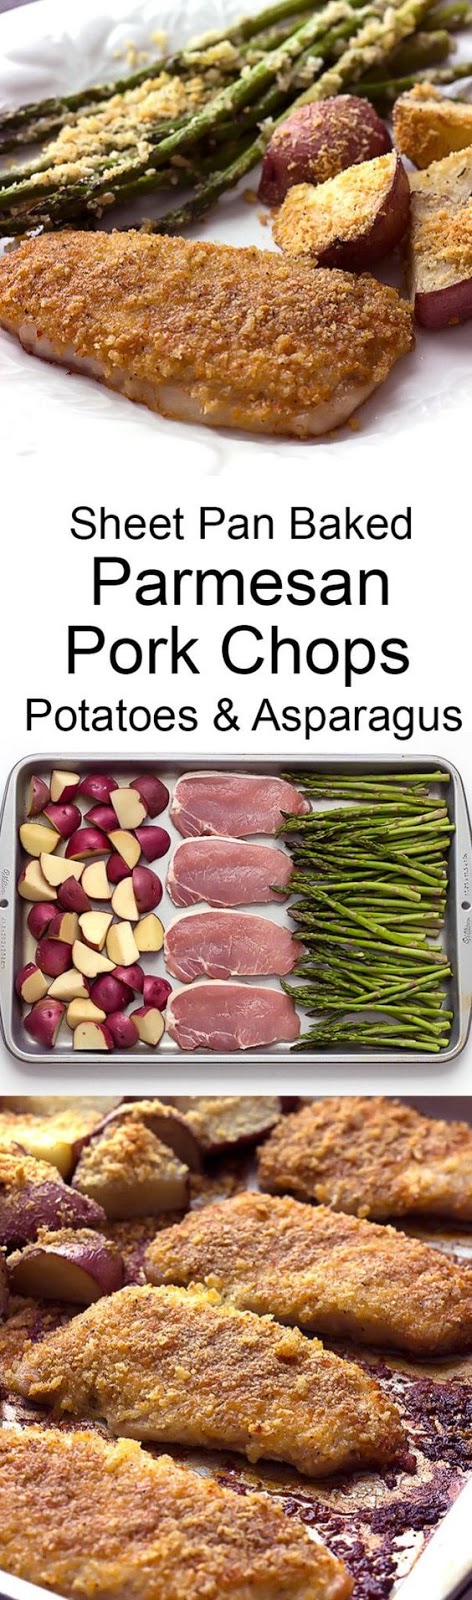 Sheet Pan Baked Parmesan Pork Chops Potatoes & Asparagus